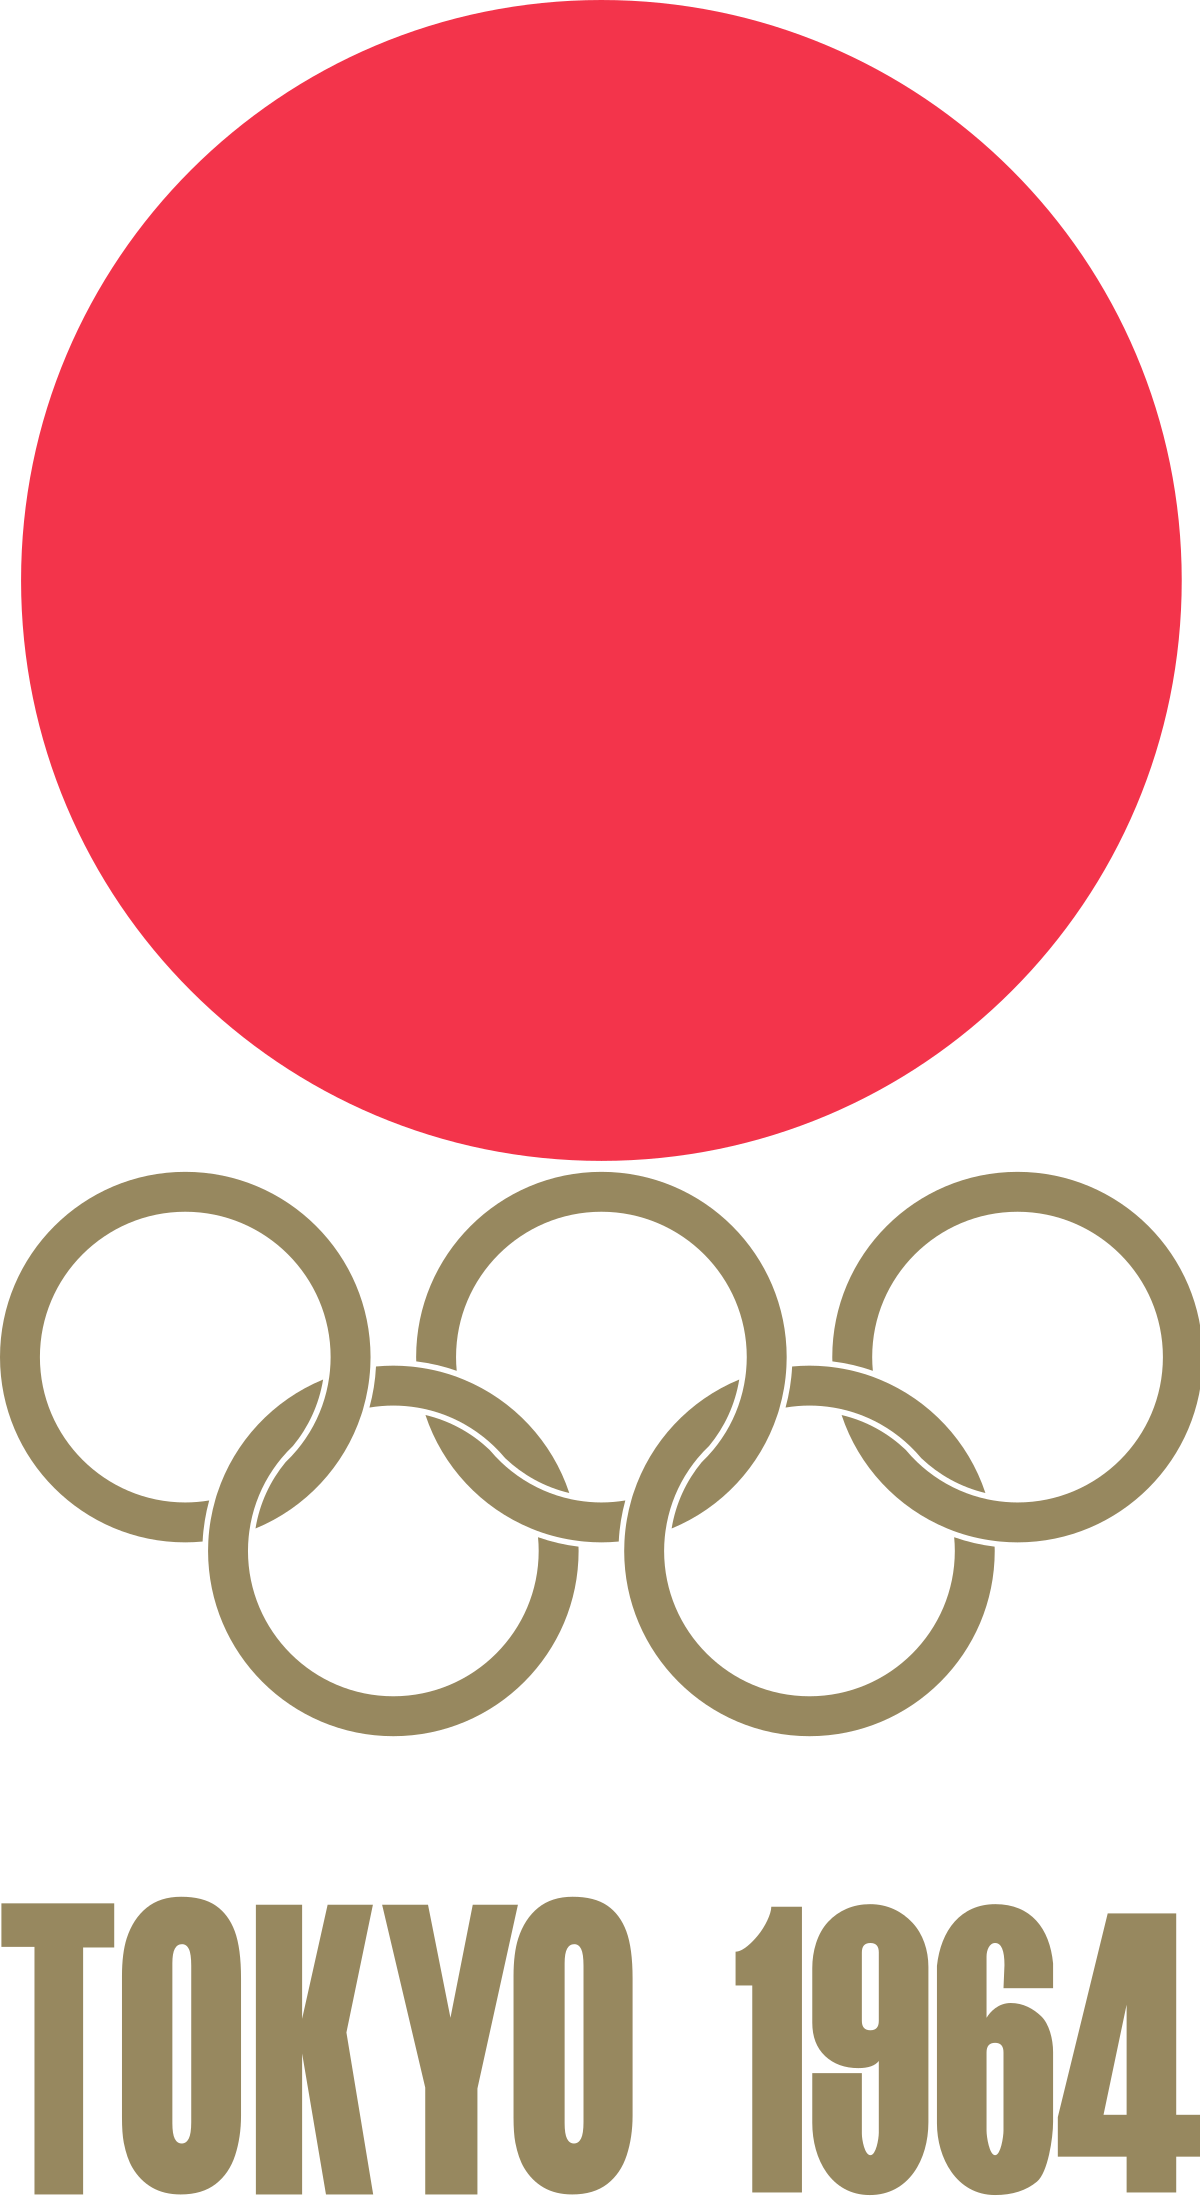 1200px-Tokyo_1964_Summer_Olympics_logo.svg.png